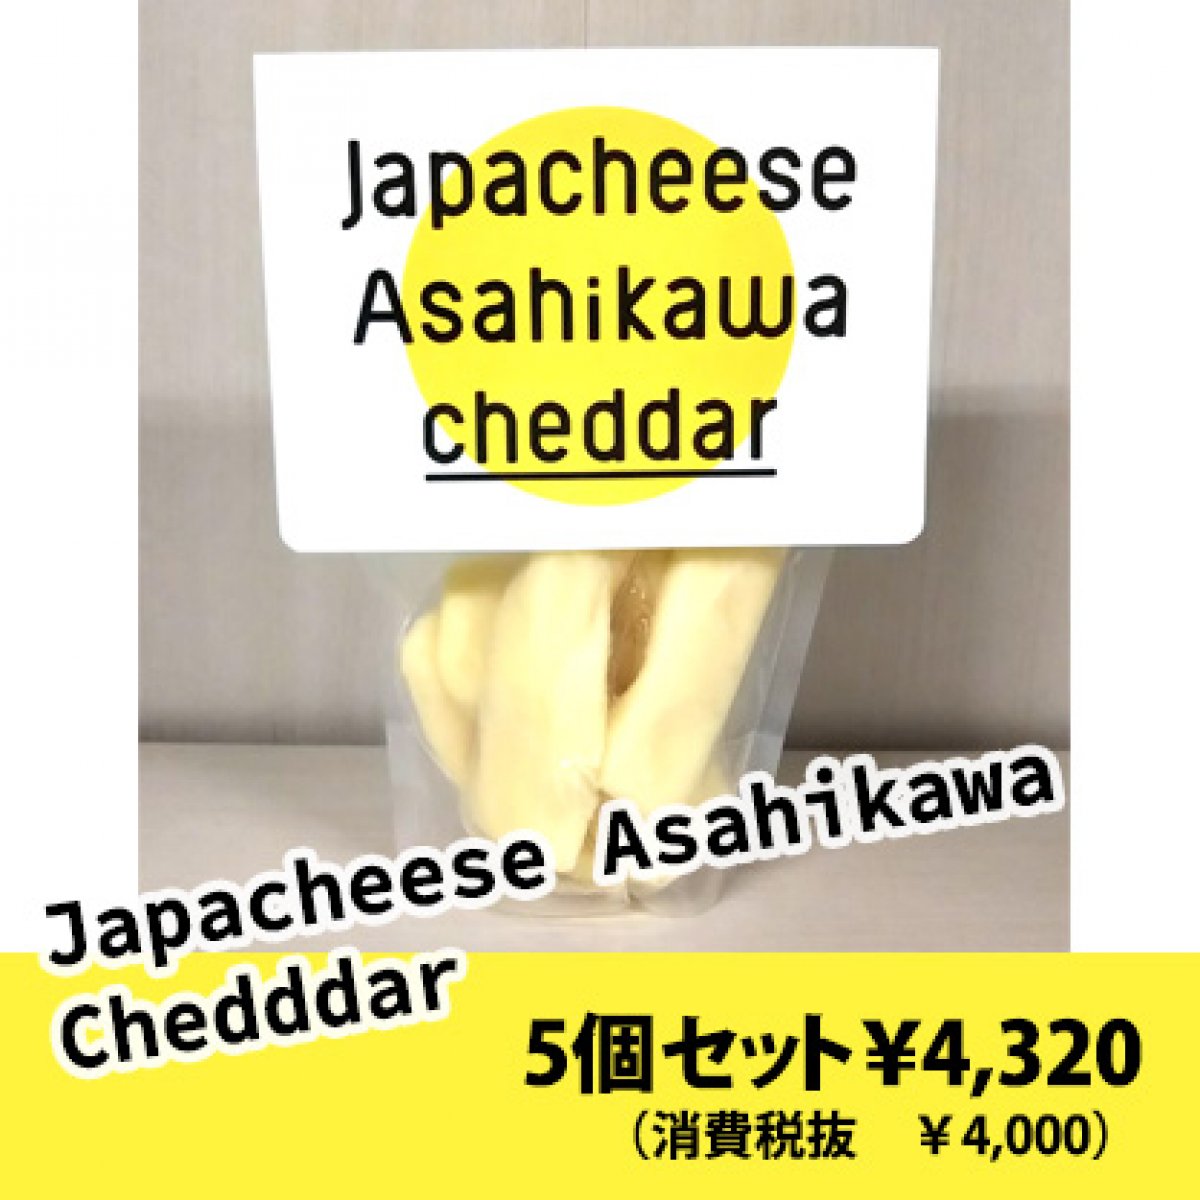 Japacheese Asahikawa Chedddar　北海道旭川チェダーチーズ